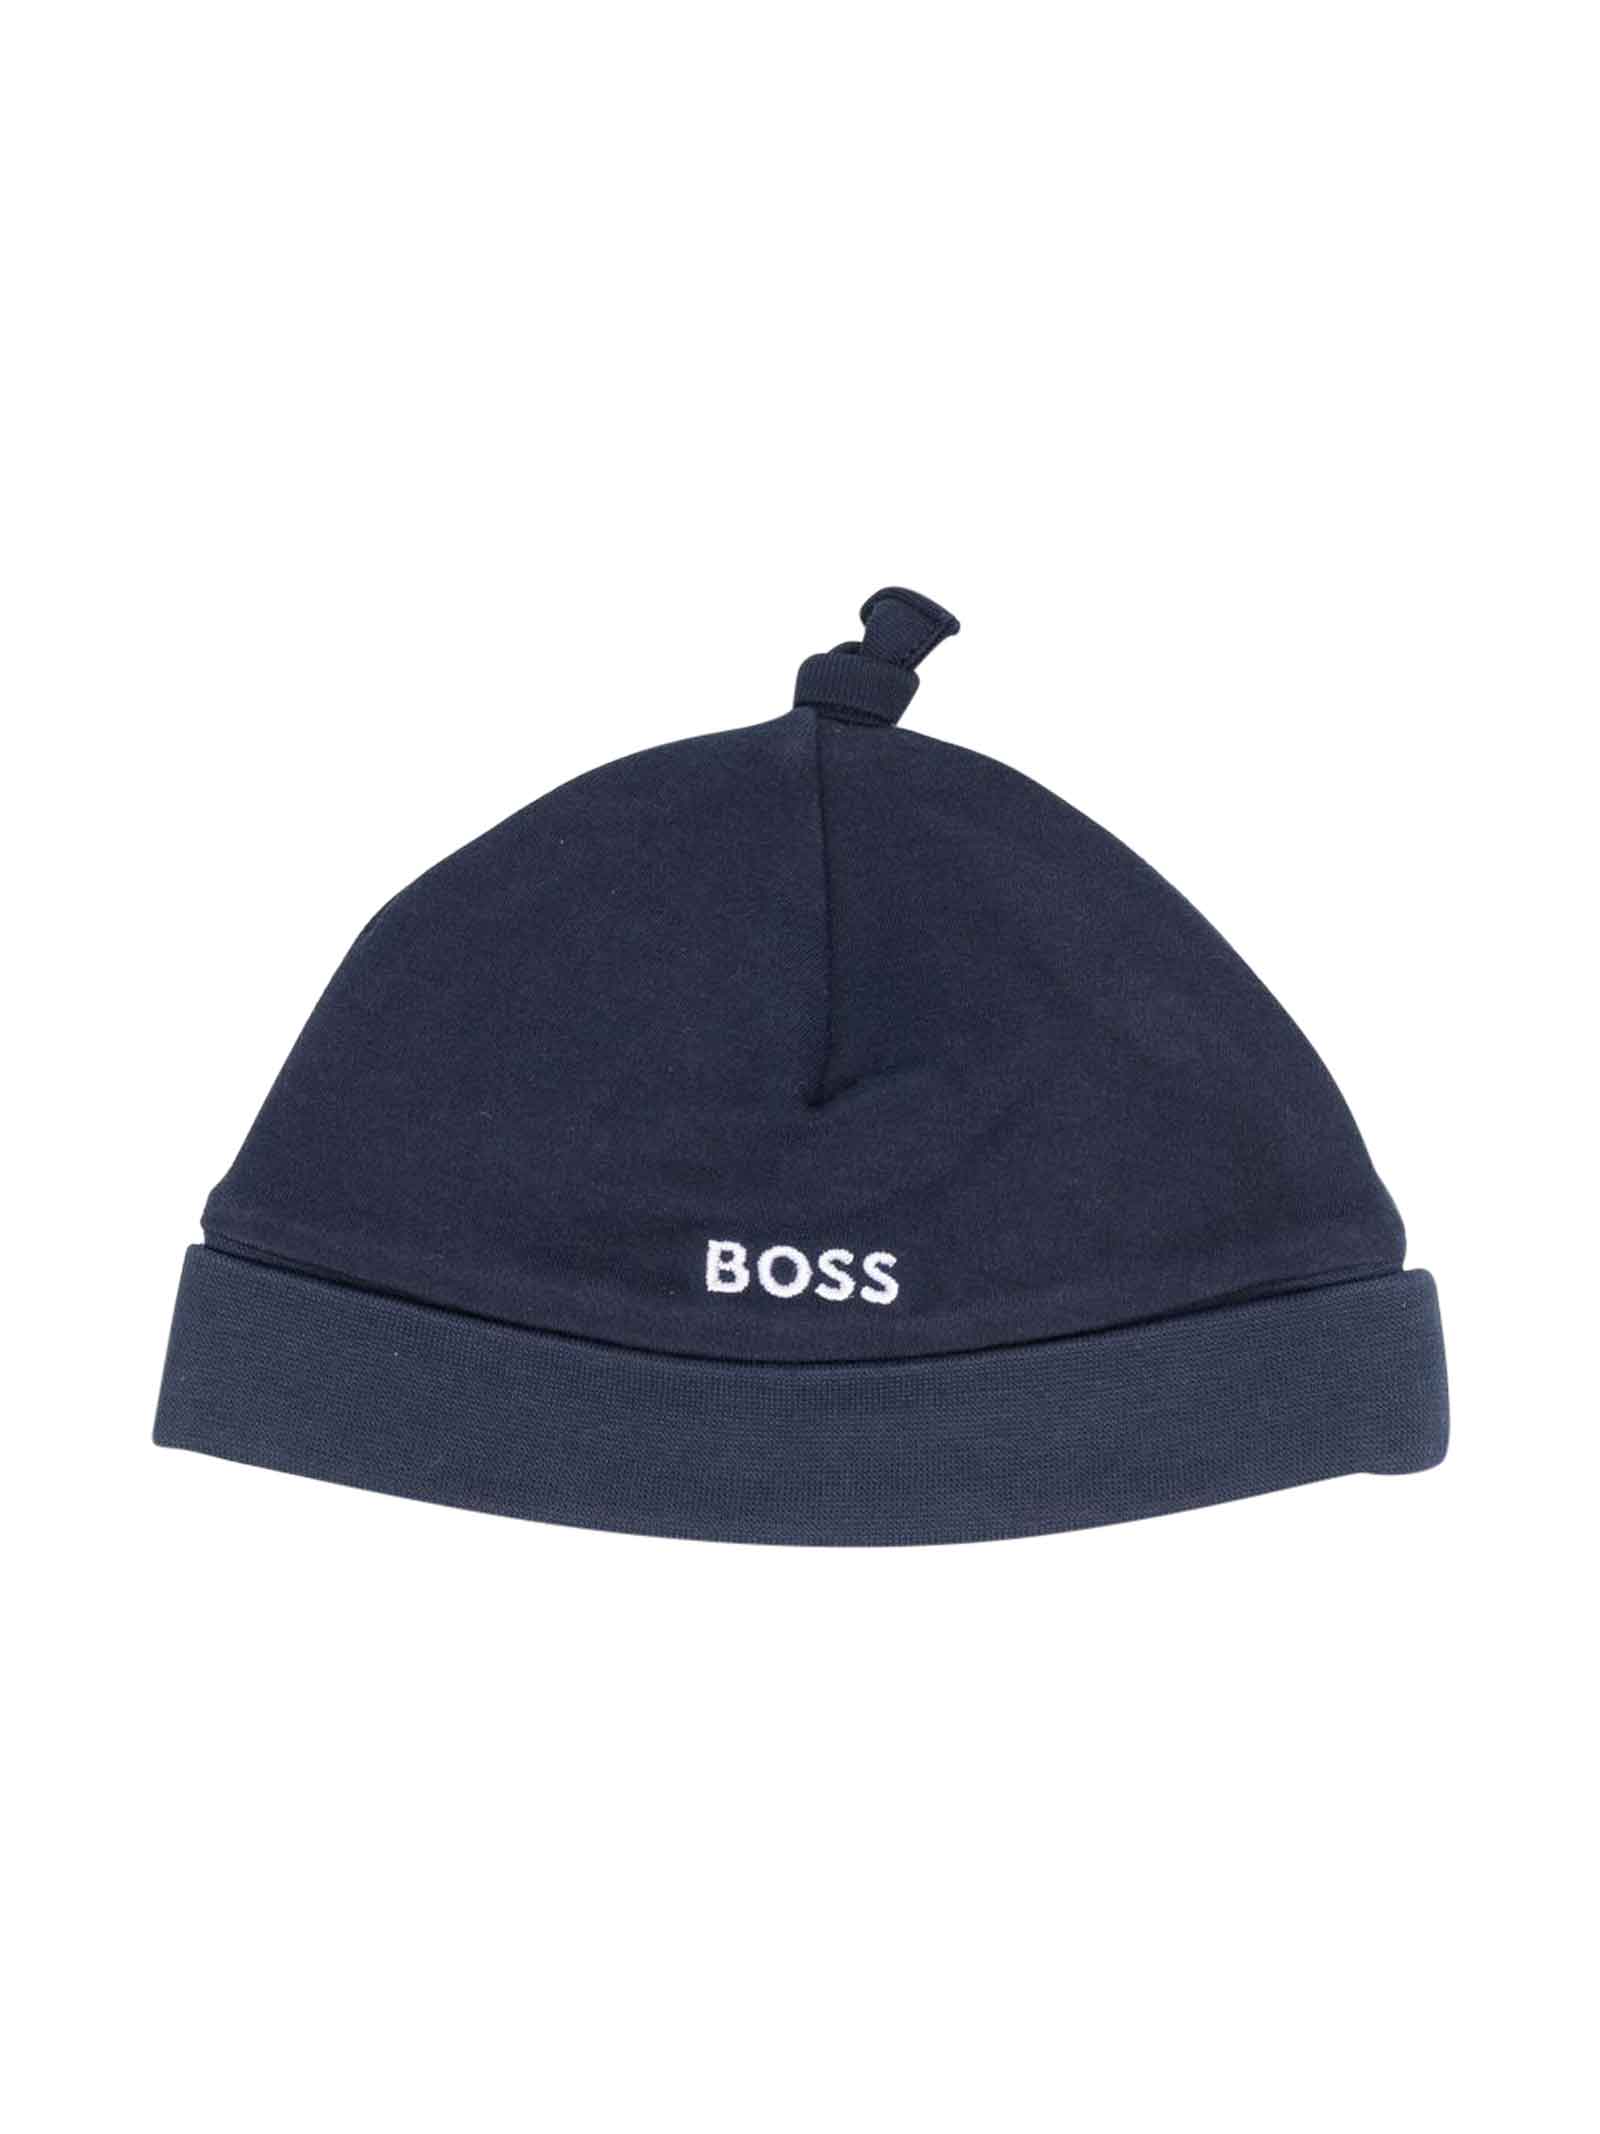 Hugo Boss Blue Baby Boy Hat